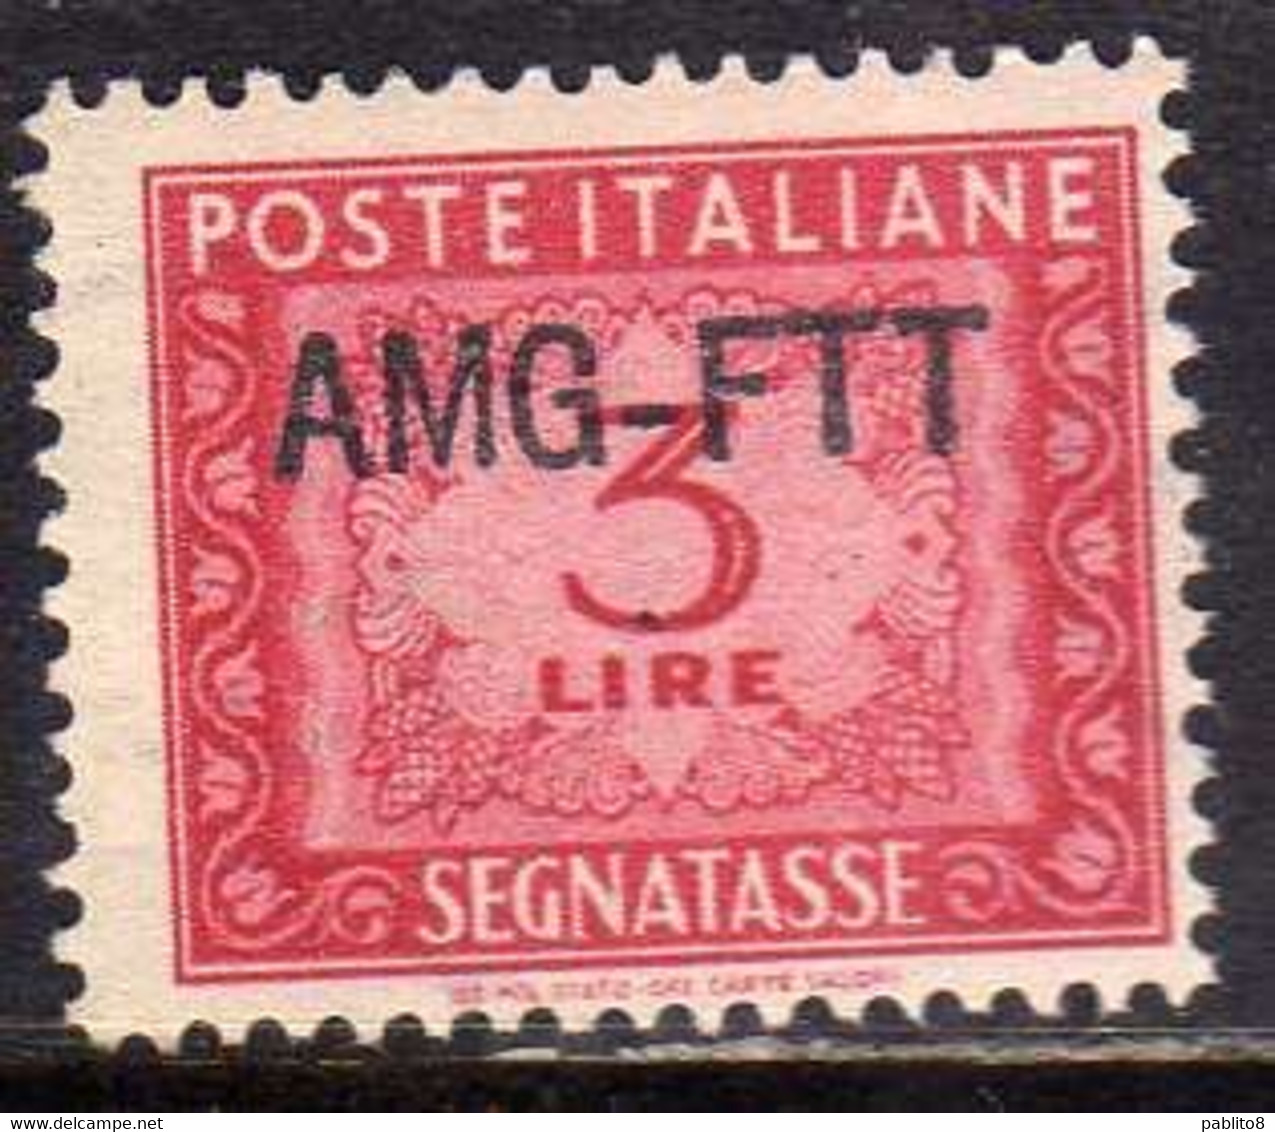 TRIESTE A 1949 1954 AMG-FTT SOPRASTAMPATO D'ITALIA ITALY OVERPRINTED SEGNATASSE POSTAGE DUE TAXES TASSE LIRE 3 MNH - Postage Due